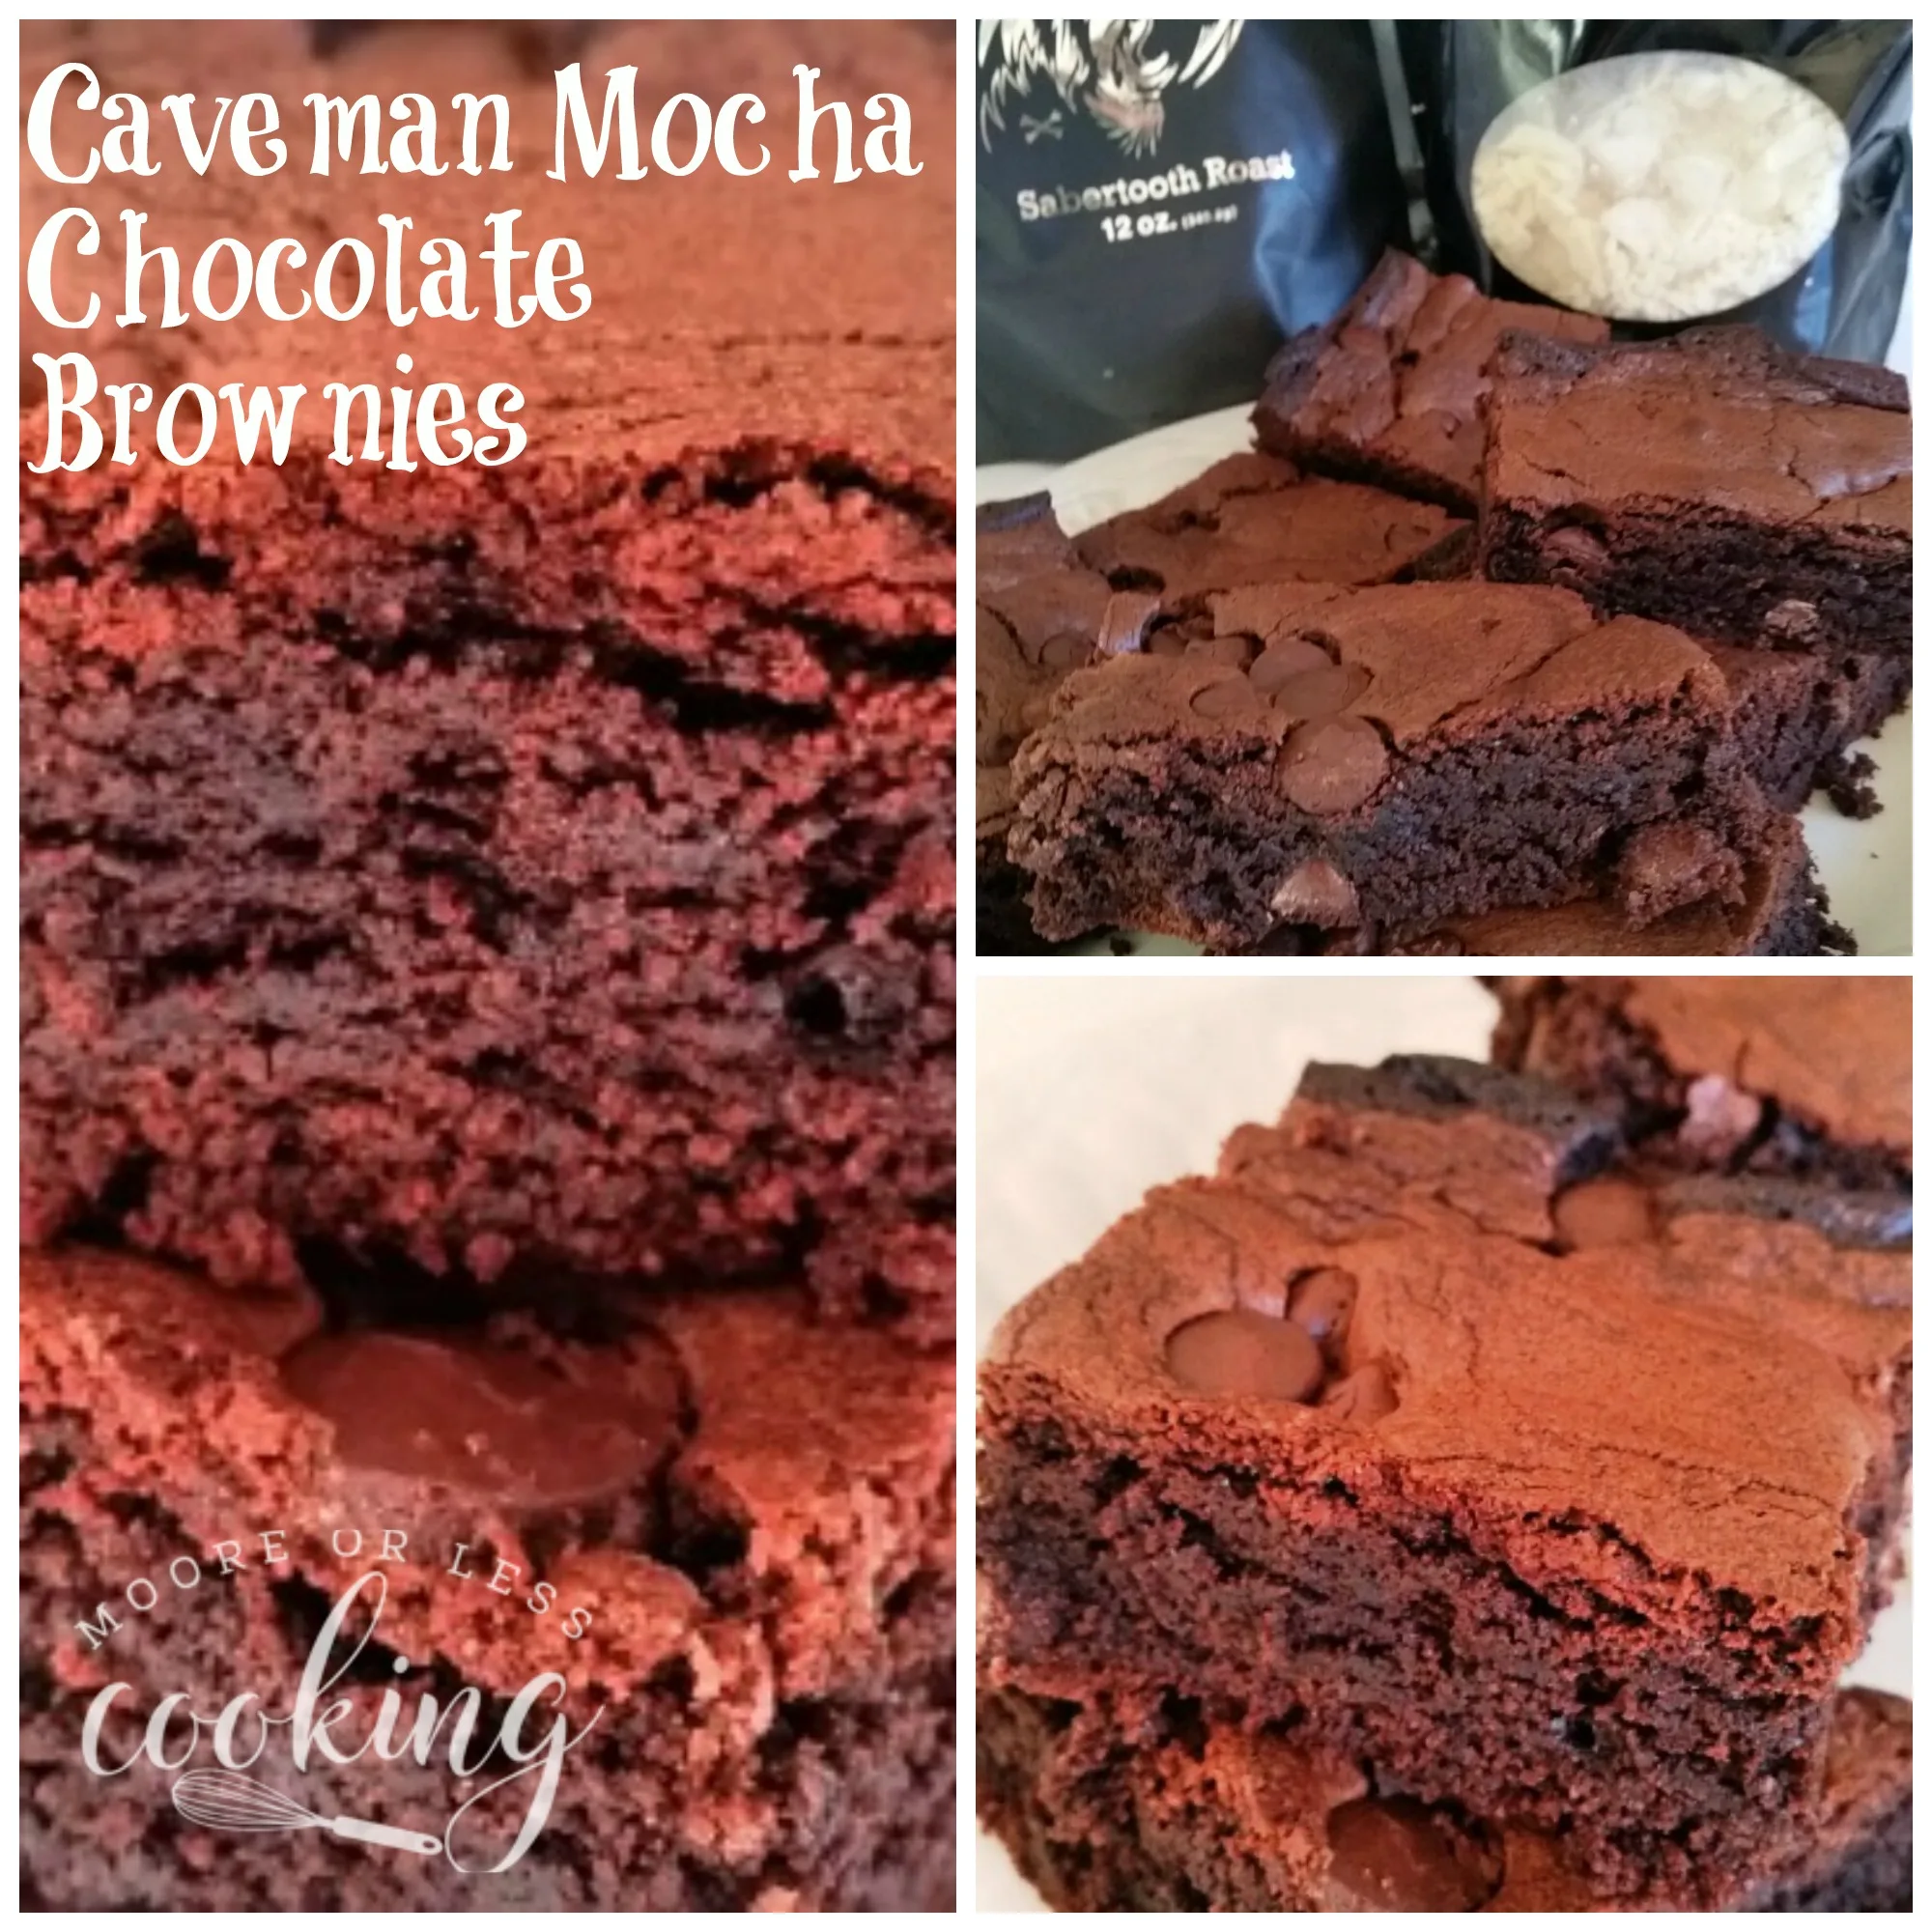 Caveman Mocha Chocolate Brownies